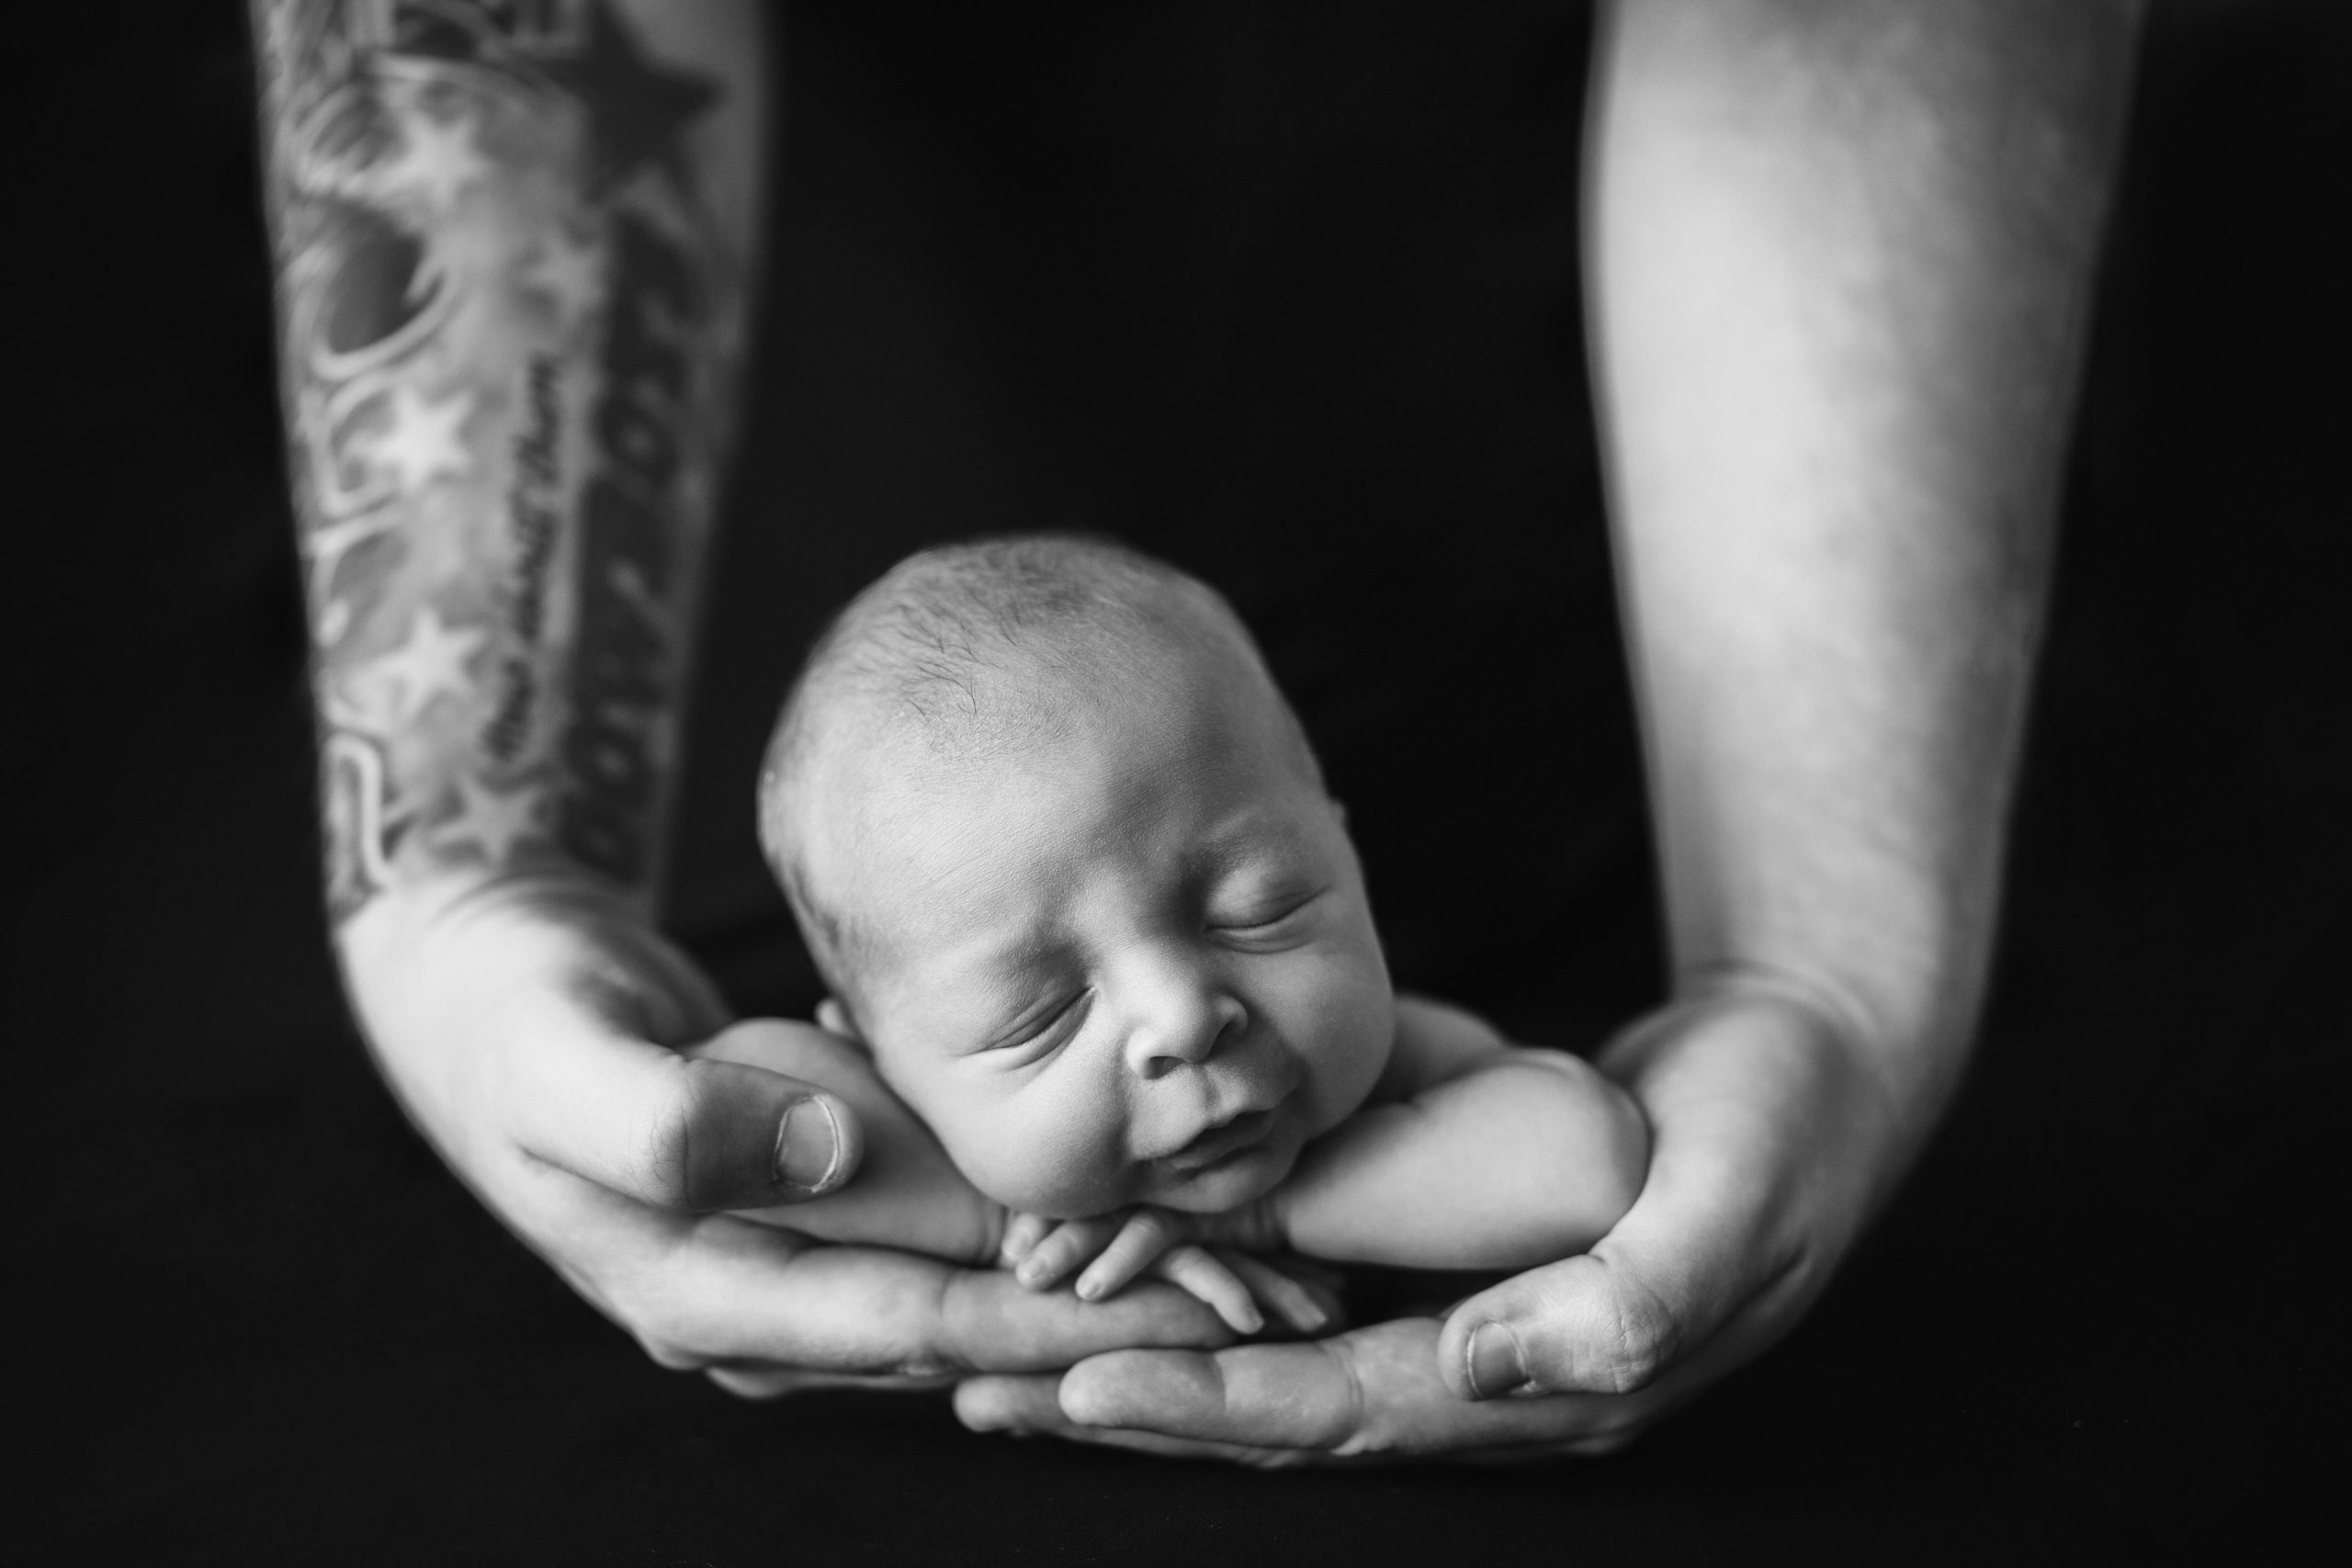 Iowa City newborn baby sleeping in father's hands